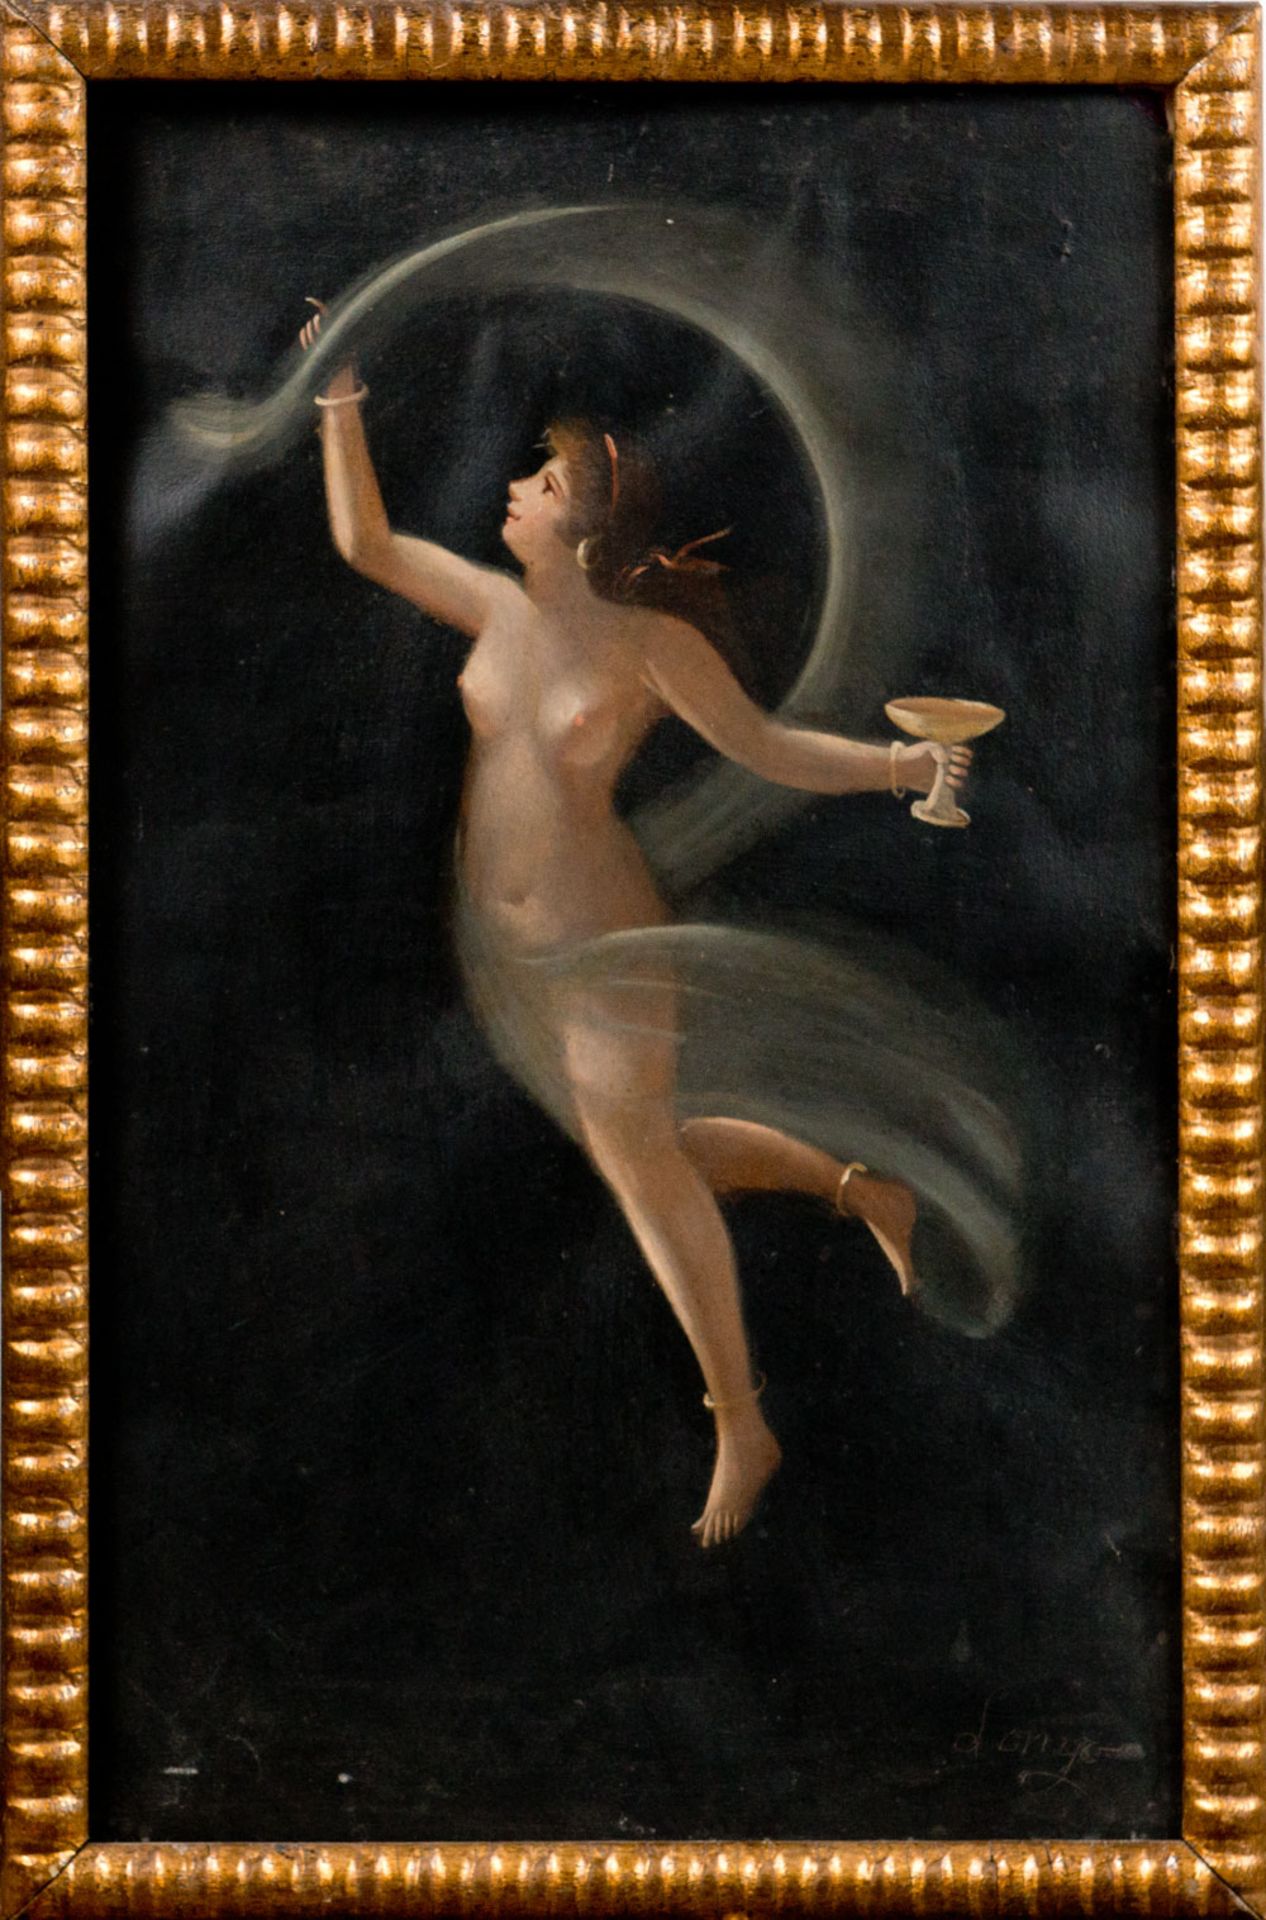 Michelangelo Maestri (1779-1812)-attributed - Image 2 of 3